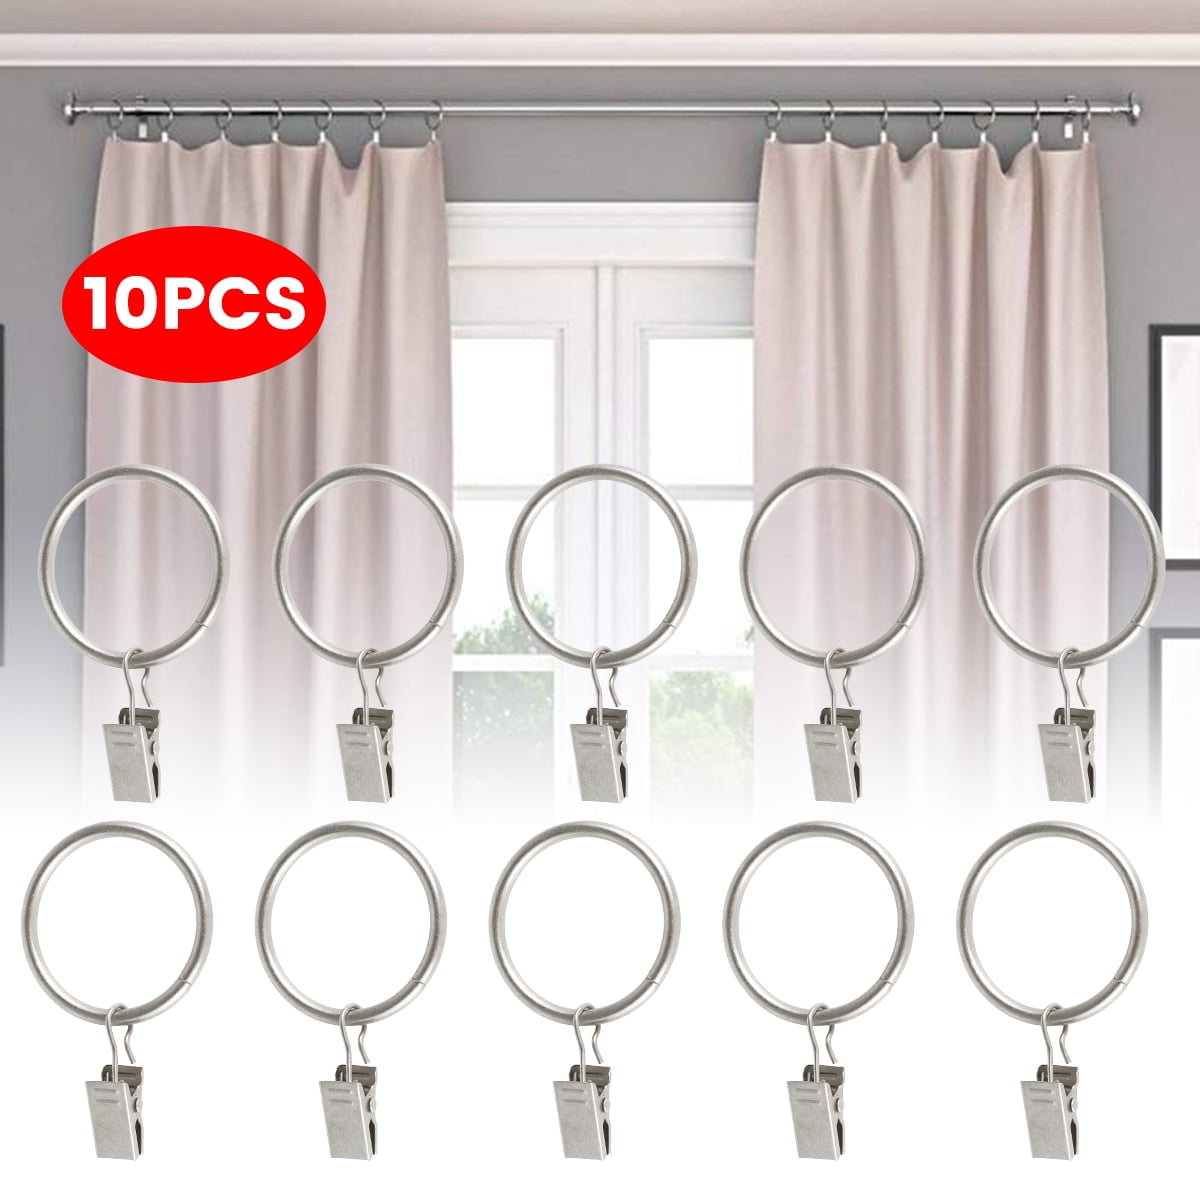 10pcs Window Shower Curtain Clips Metal Hook Heavy Duty Clip Ring Supply 